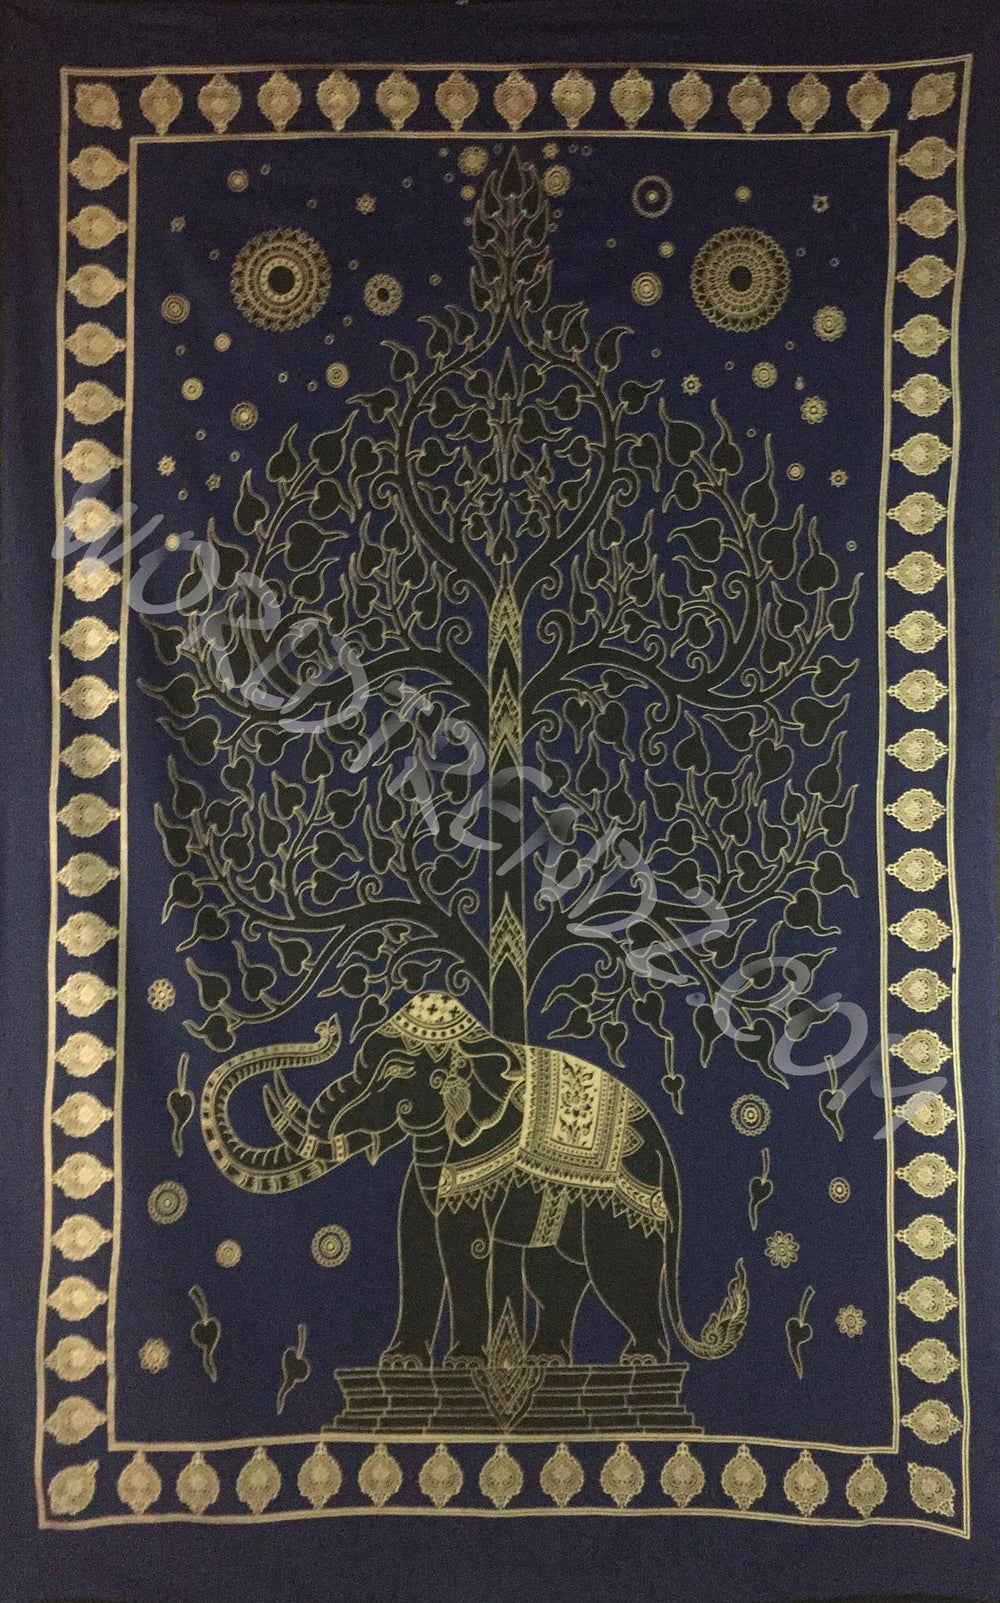 ELEPHANT BODHI TREE TAPESTRY NAVY BLUE GOLD